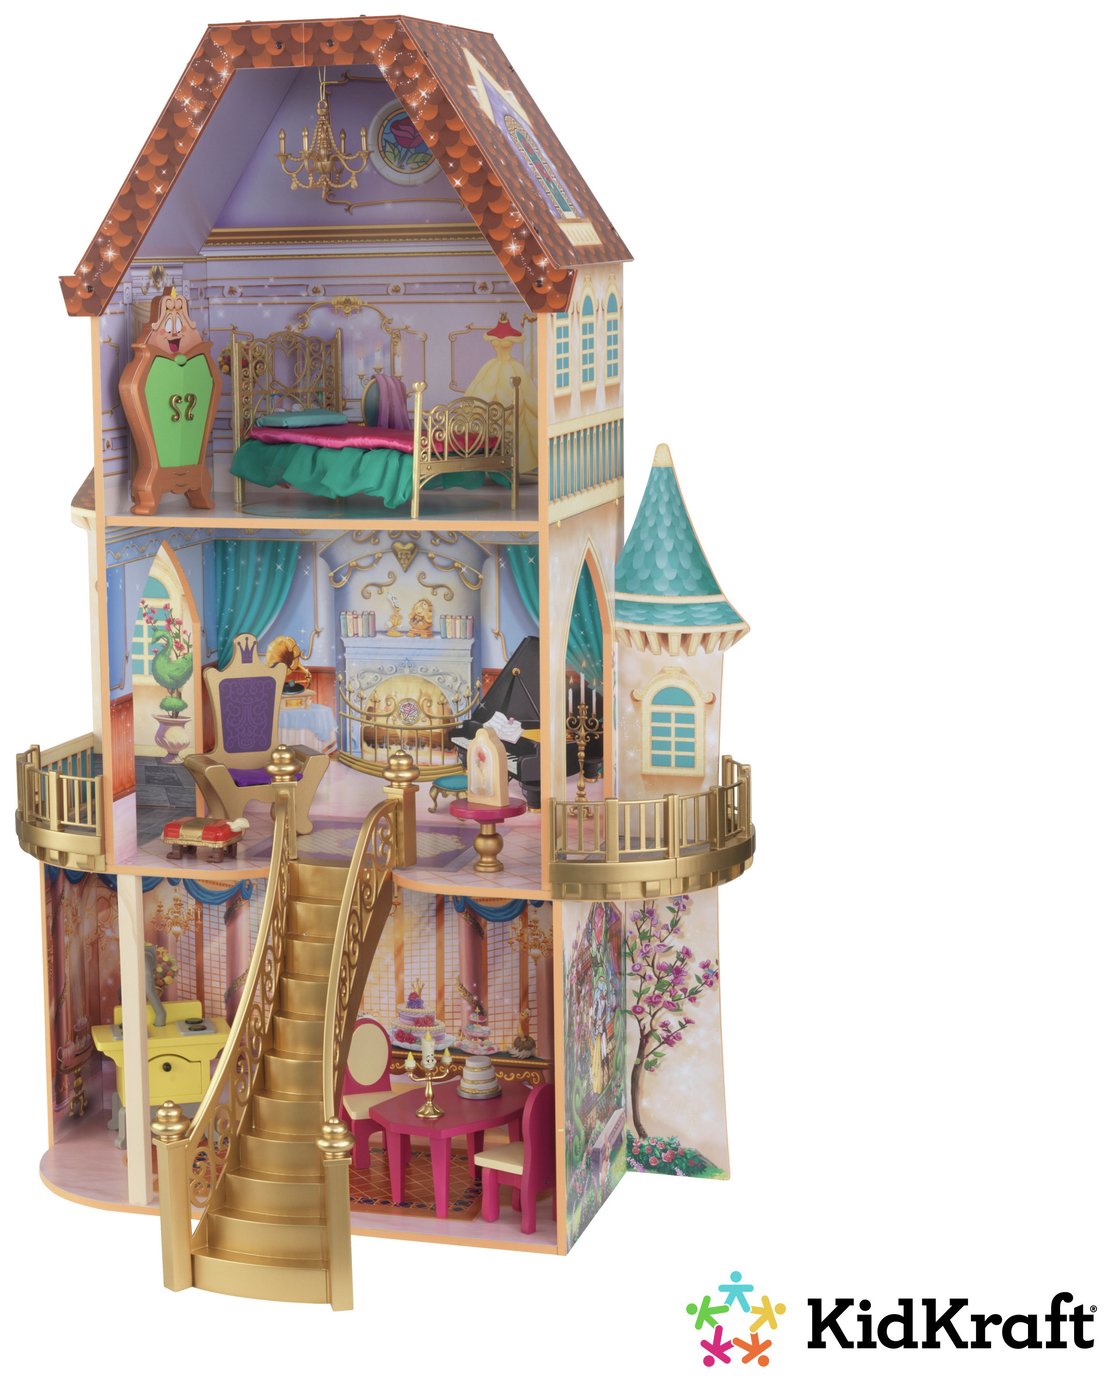 KidKraft Disney Belle's Enchanted Wooden Dolls House